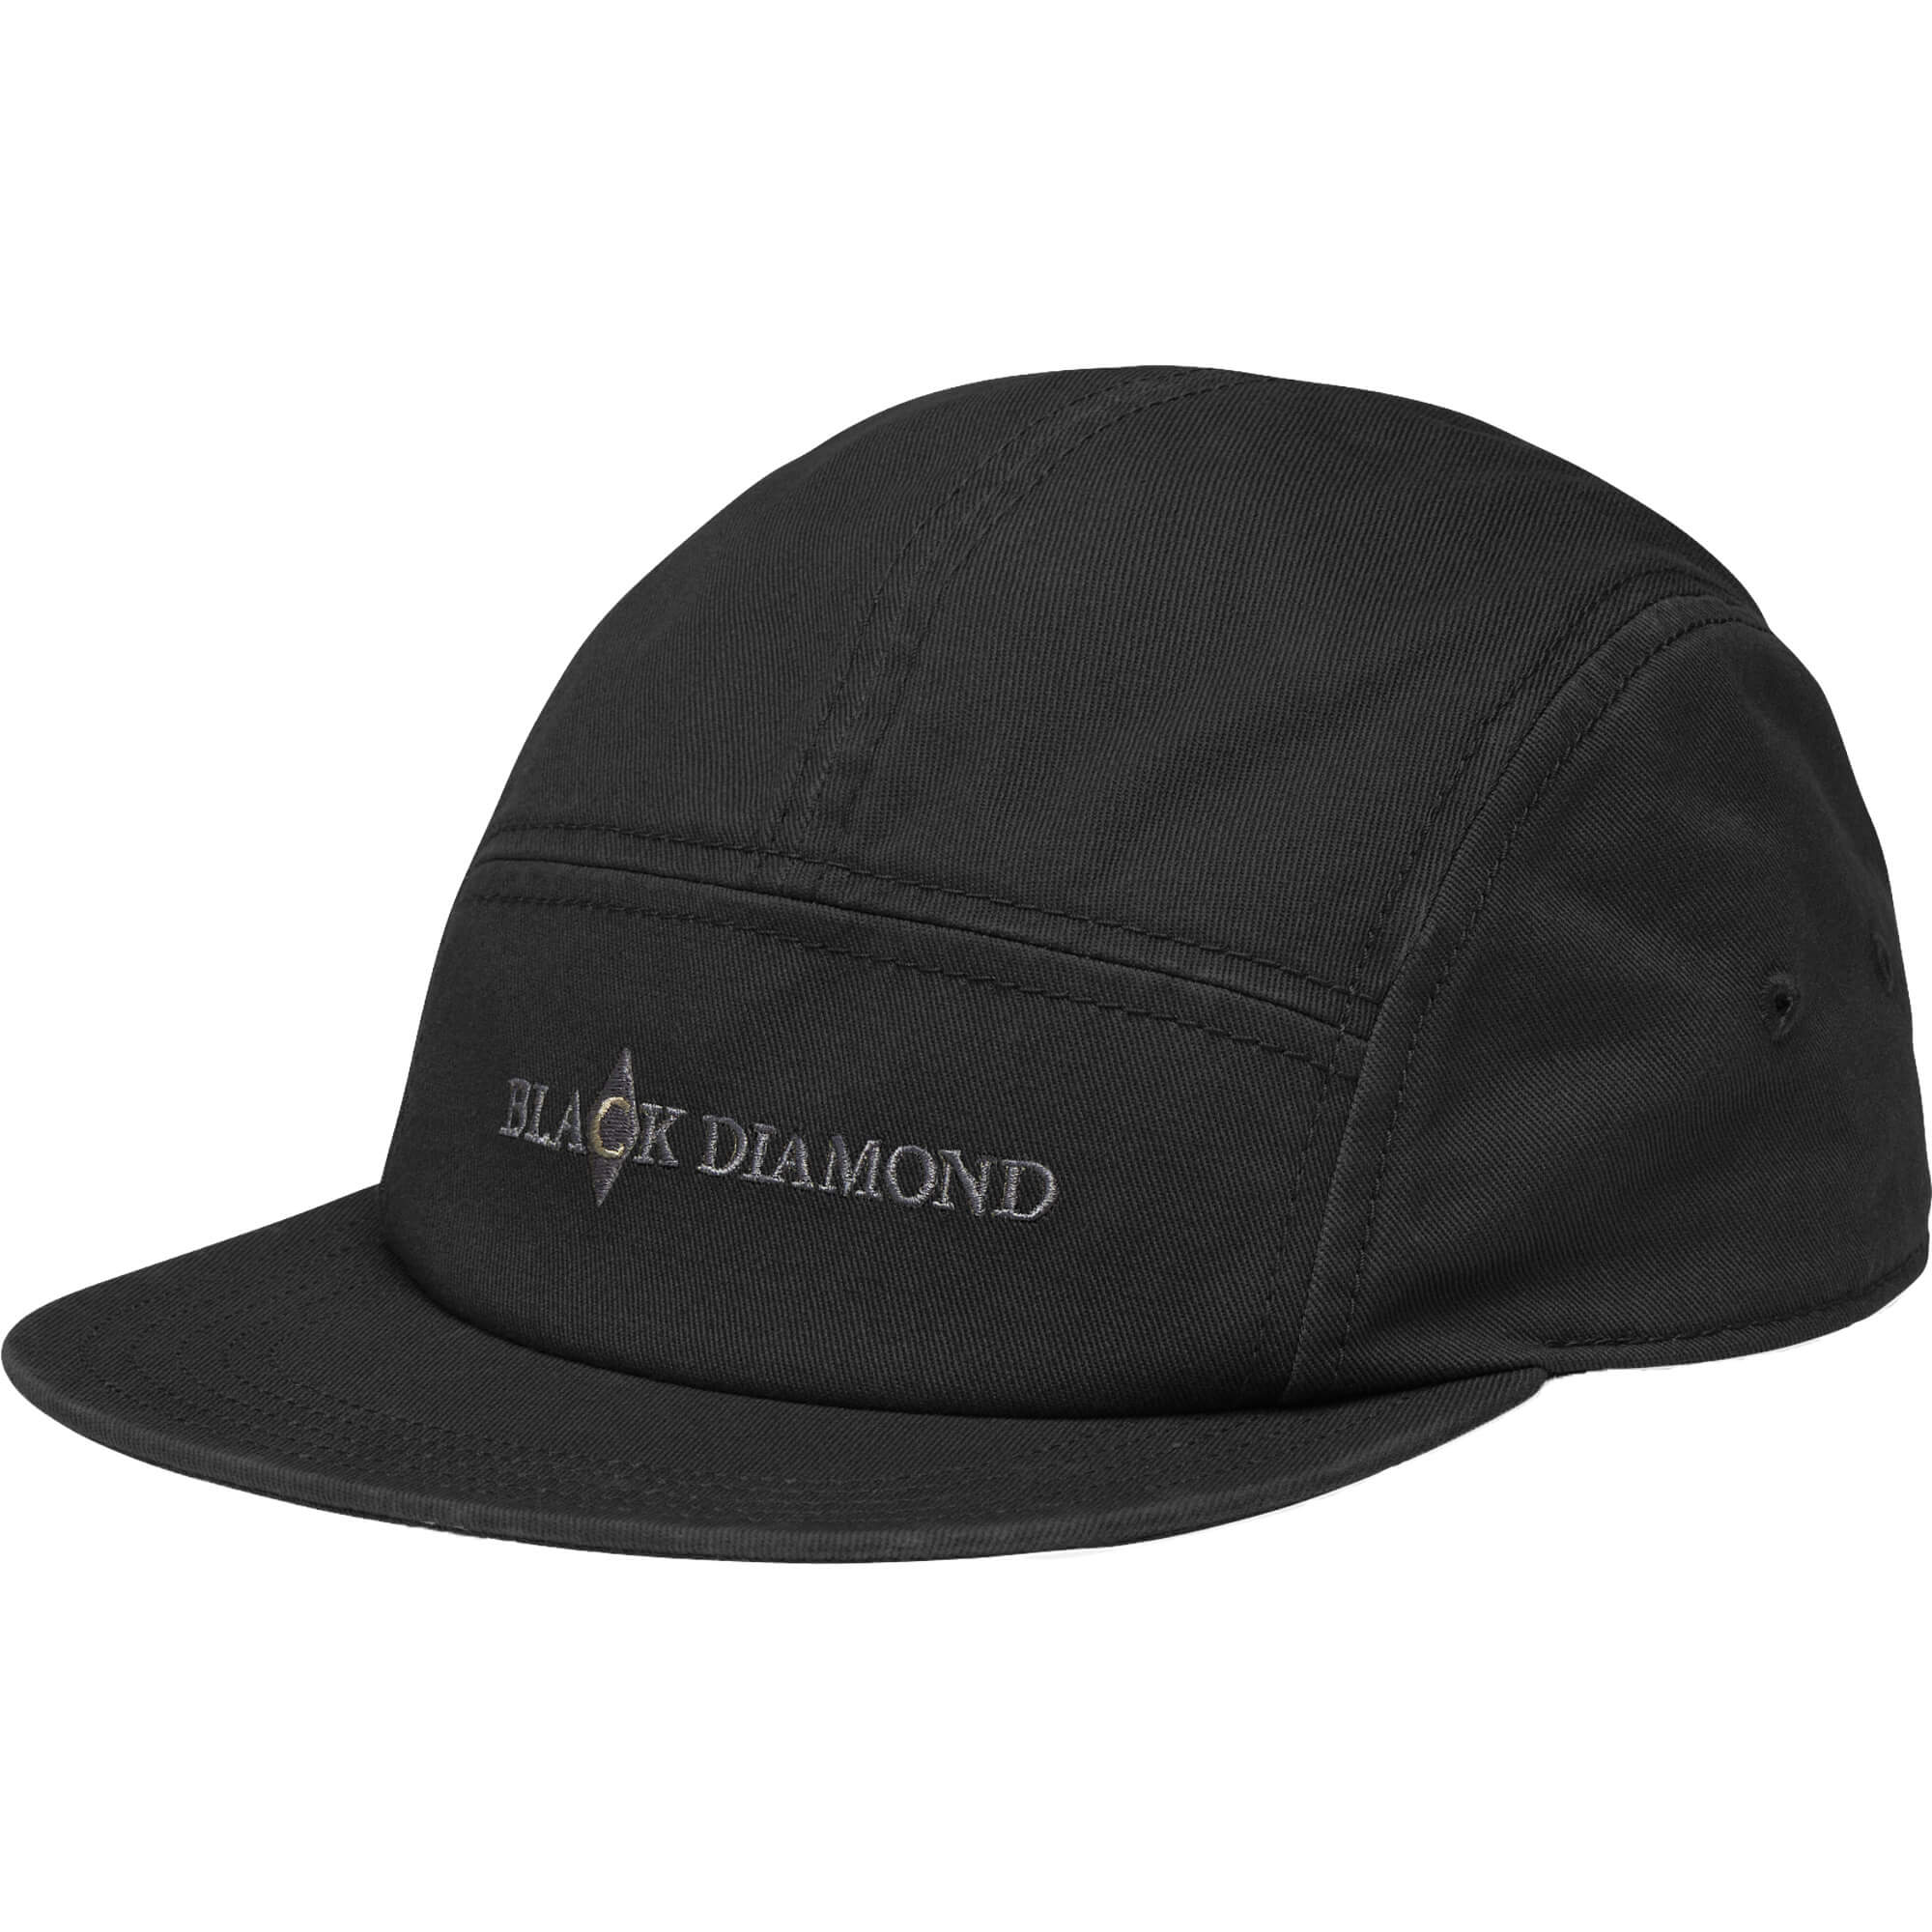 Black Diamond Camper 5 Panel Hat Baseball Cap